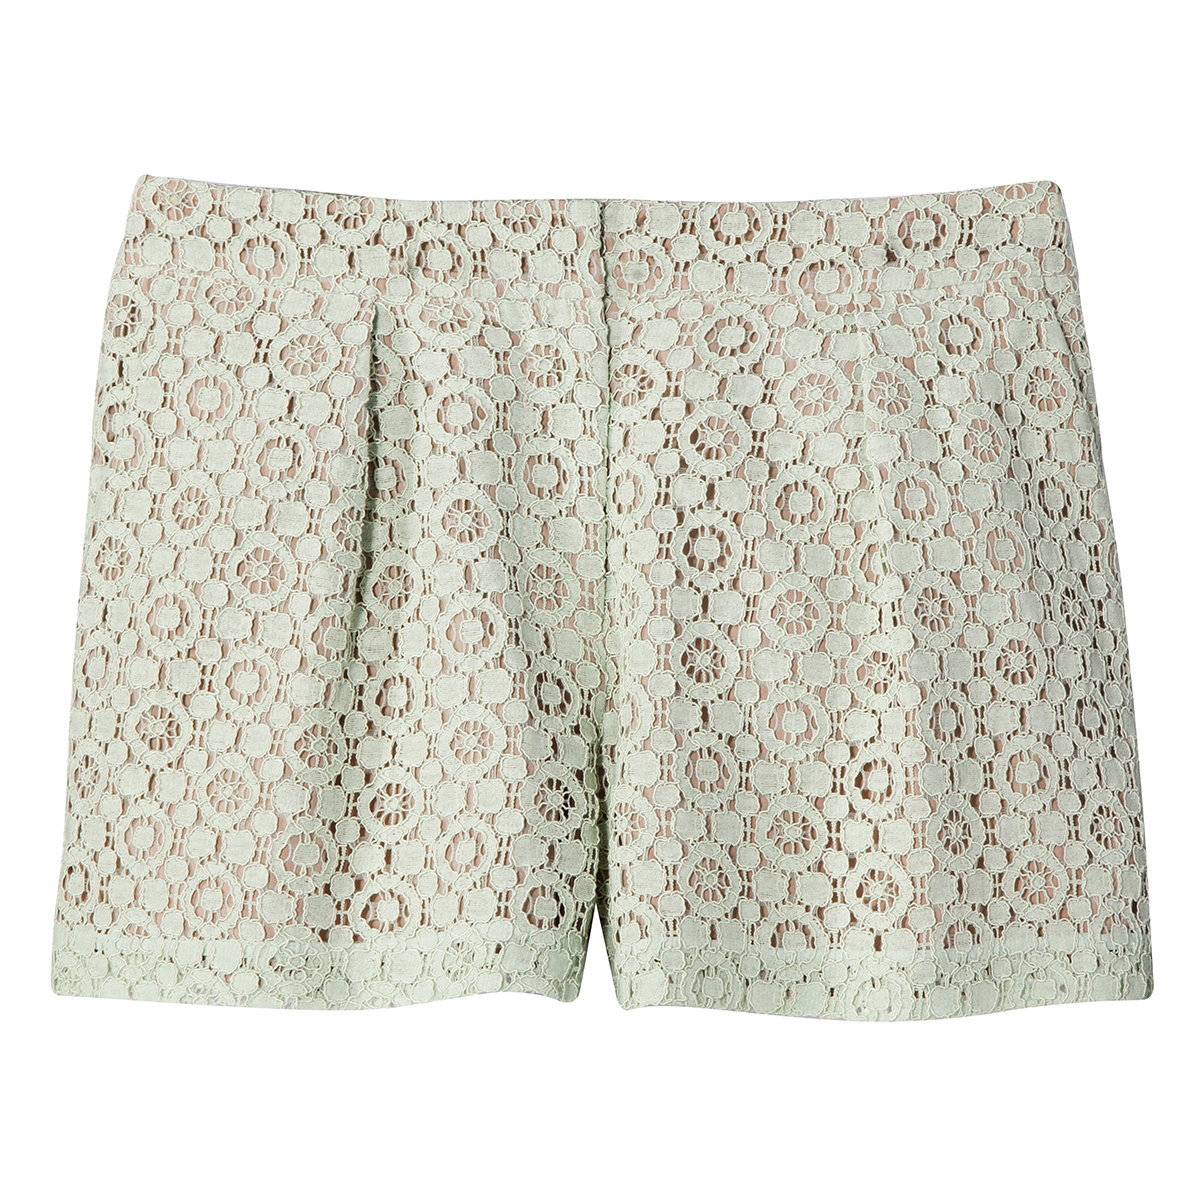 Mint Green Lace Shorts, $28